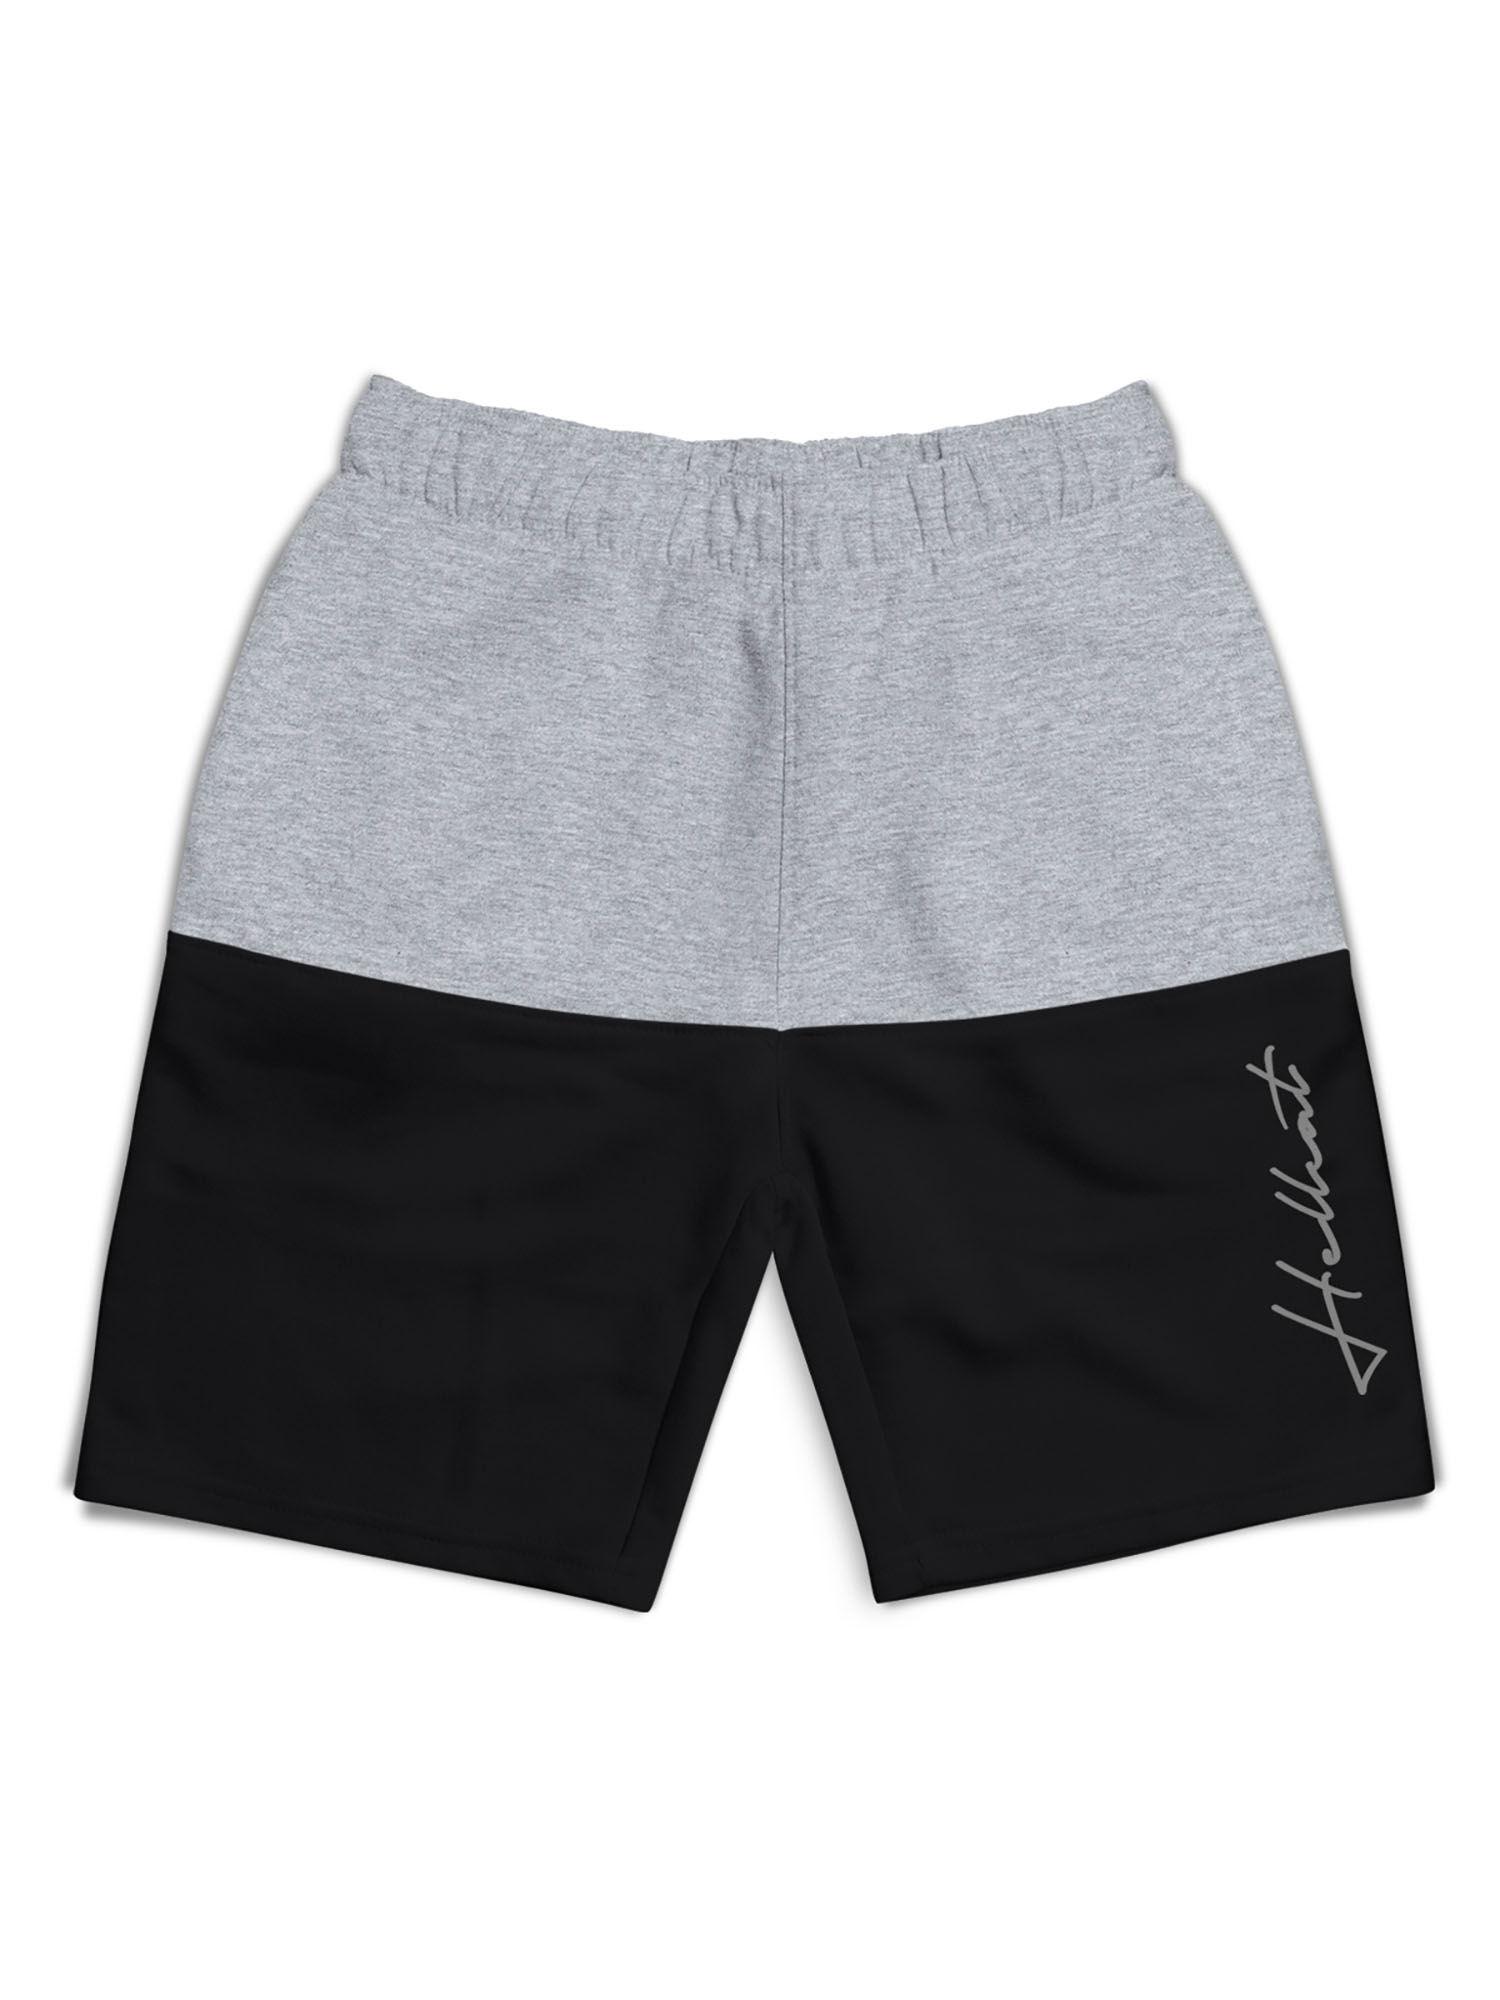 grey-melange-colorblocked-mid-rise-shorts-for-boys